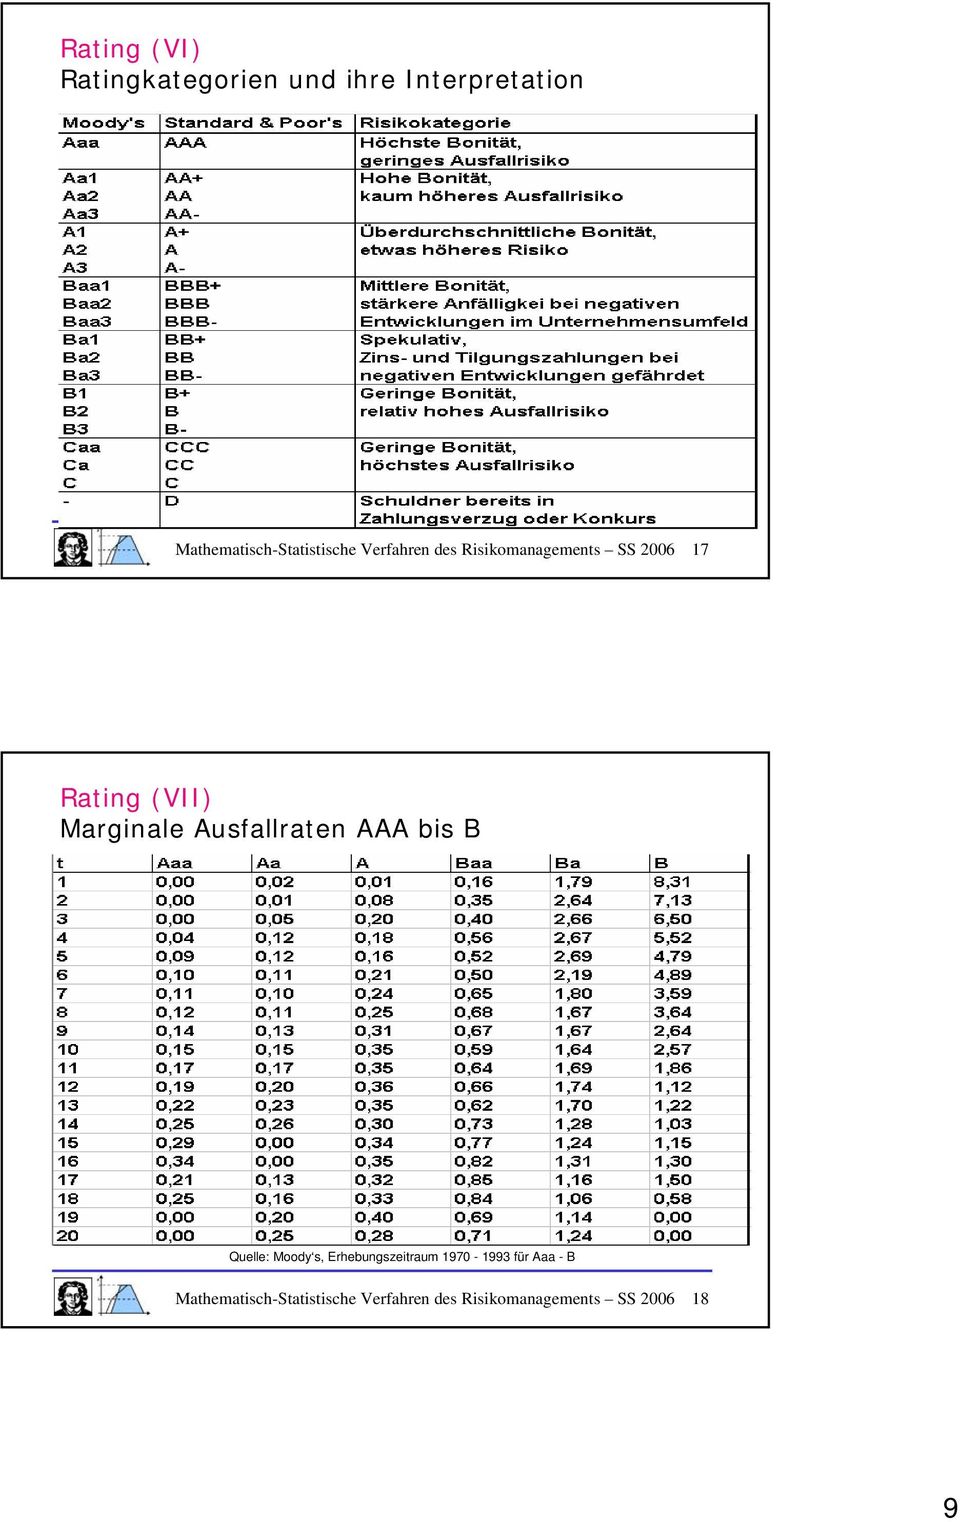 Rating (VII) Marginale Ausfallraten AAA bis B Quelle: Moody s,